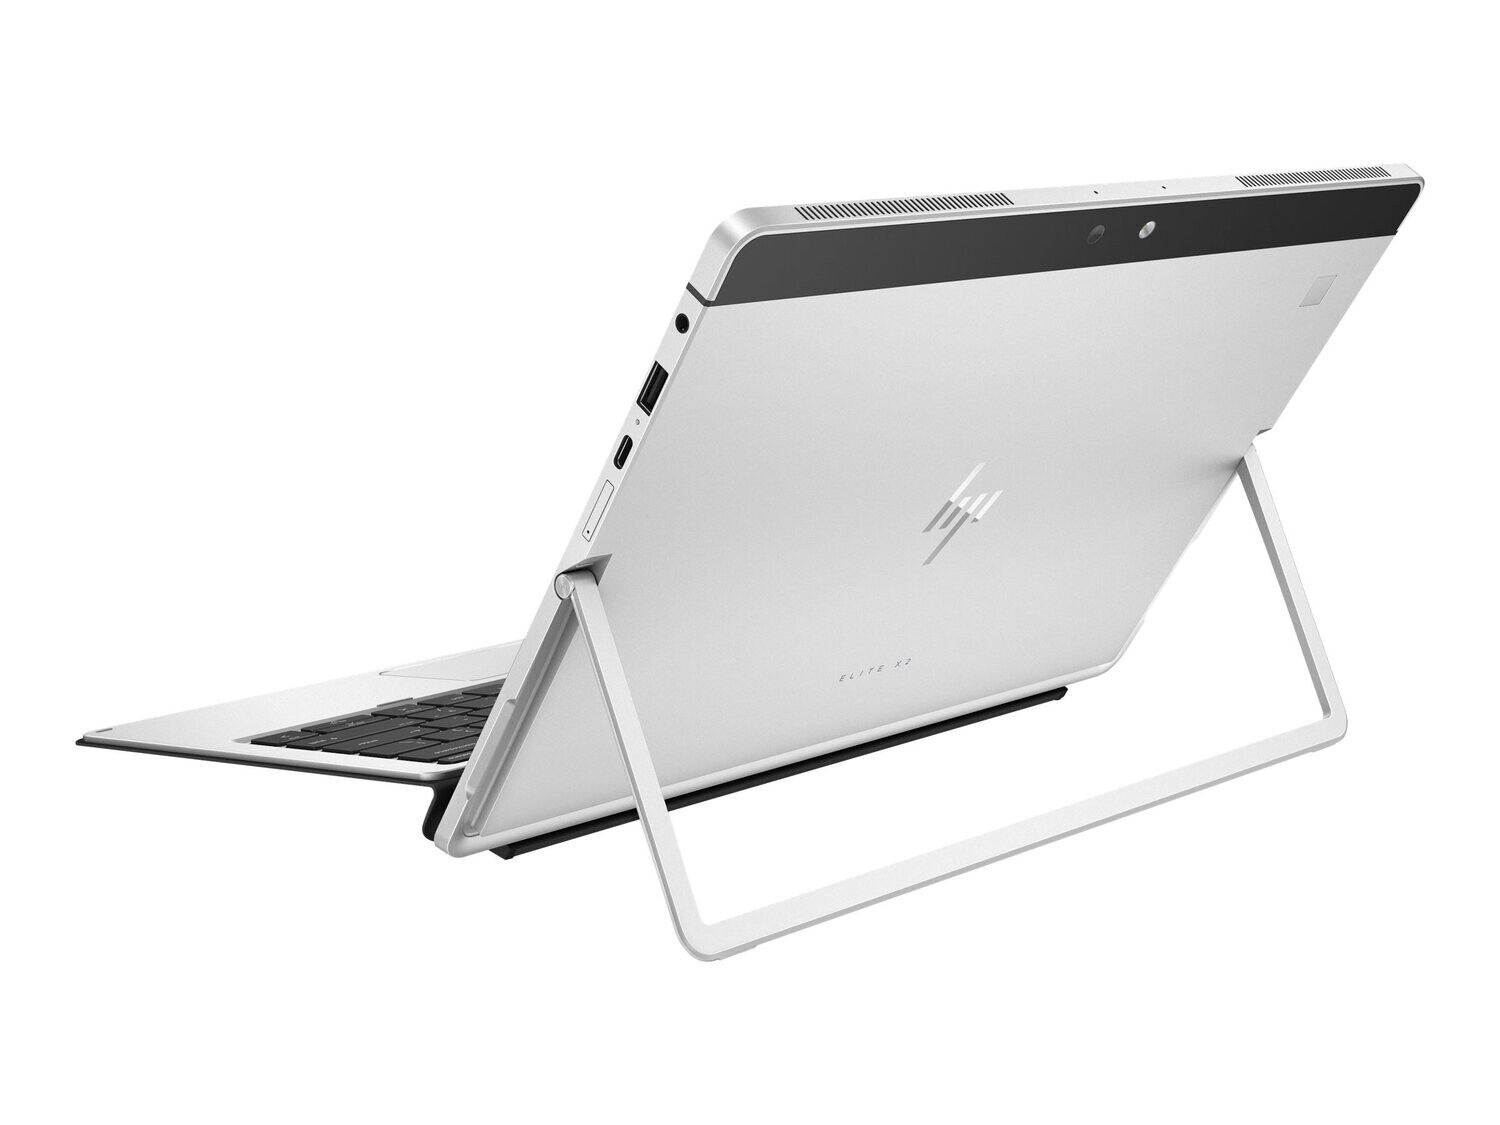 HP Elite x2 1012 G2 Tablet | 12.3" IPS Touch Screen (2736 x 1824) | Intel Core i5-7200U | 8GB | 256GB NVMe | Windows 10 Pro